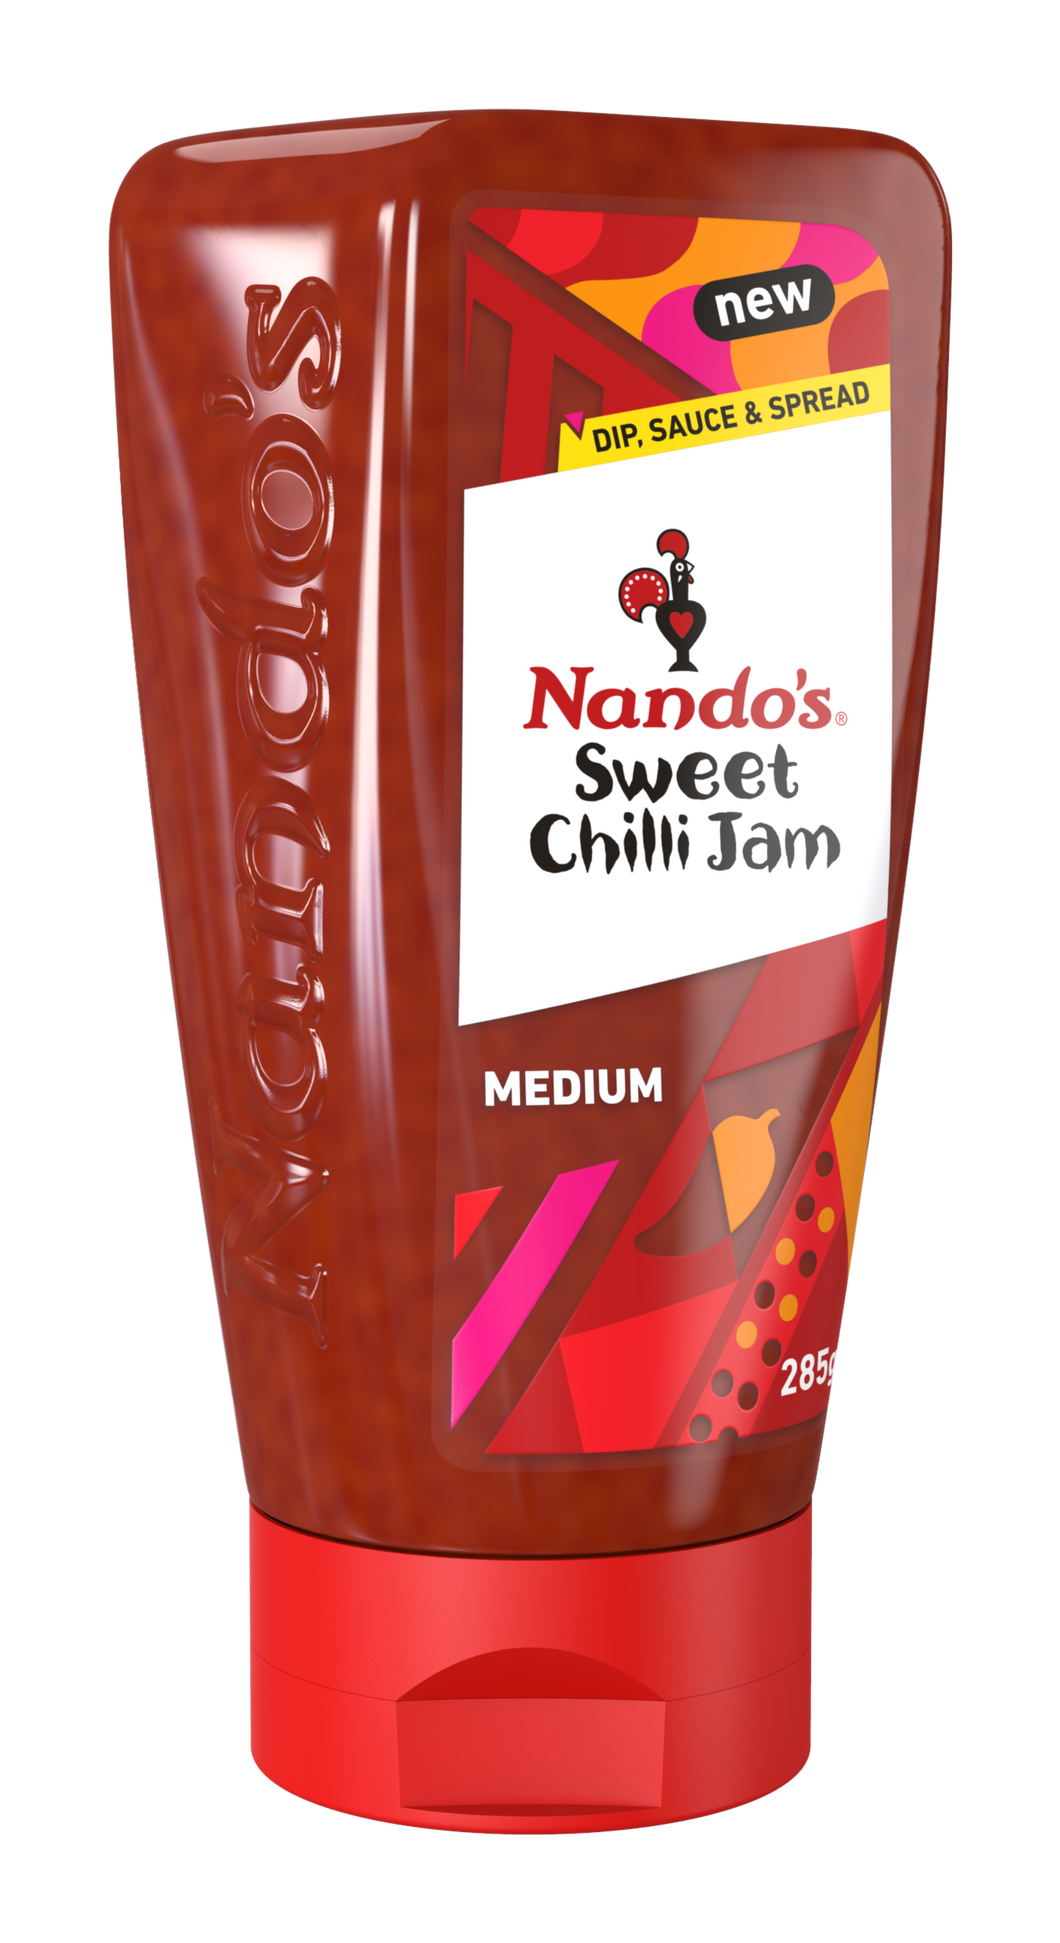 Nando's Sweet Chilli Jam Medium 285g Meats & Eats